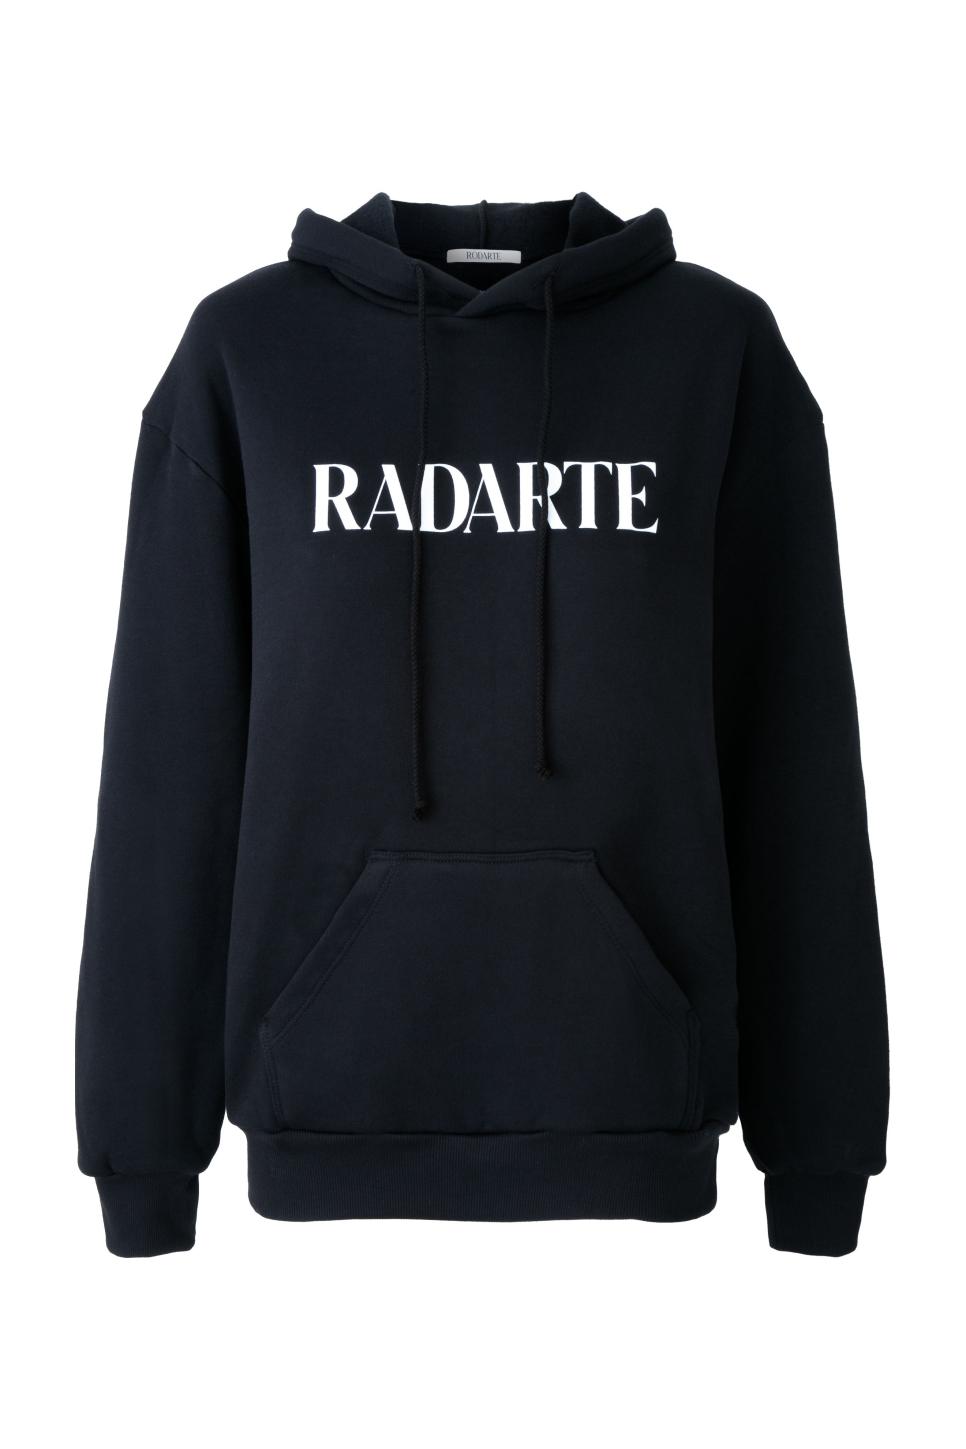 rx-rodarterodarte-womens-radarte-logo-hoodie.jpeg